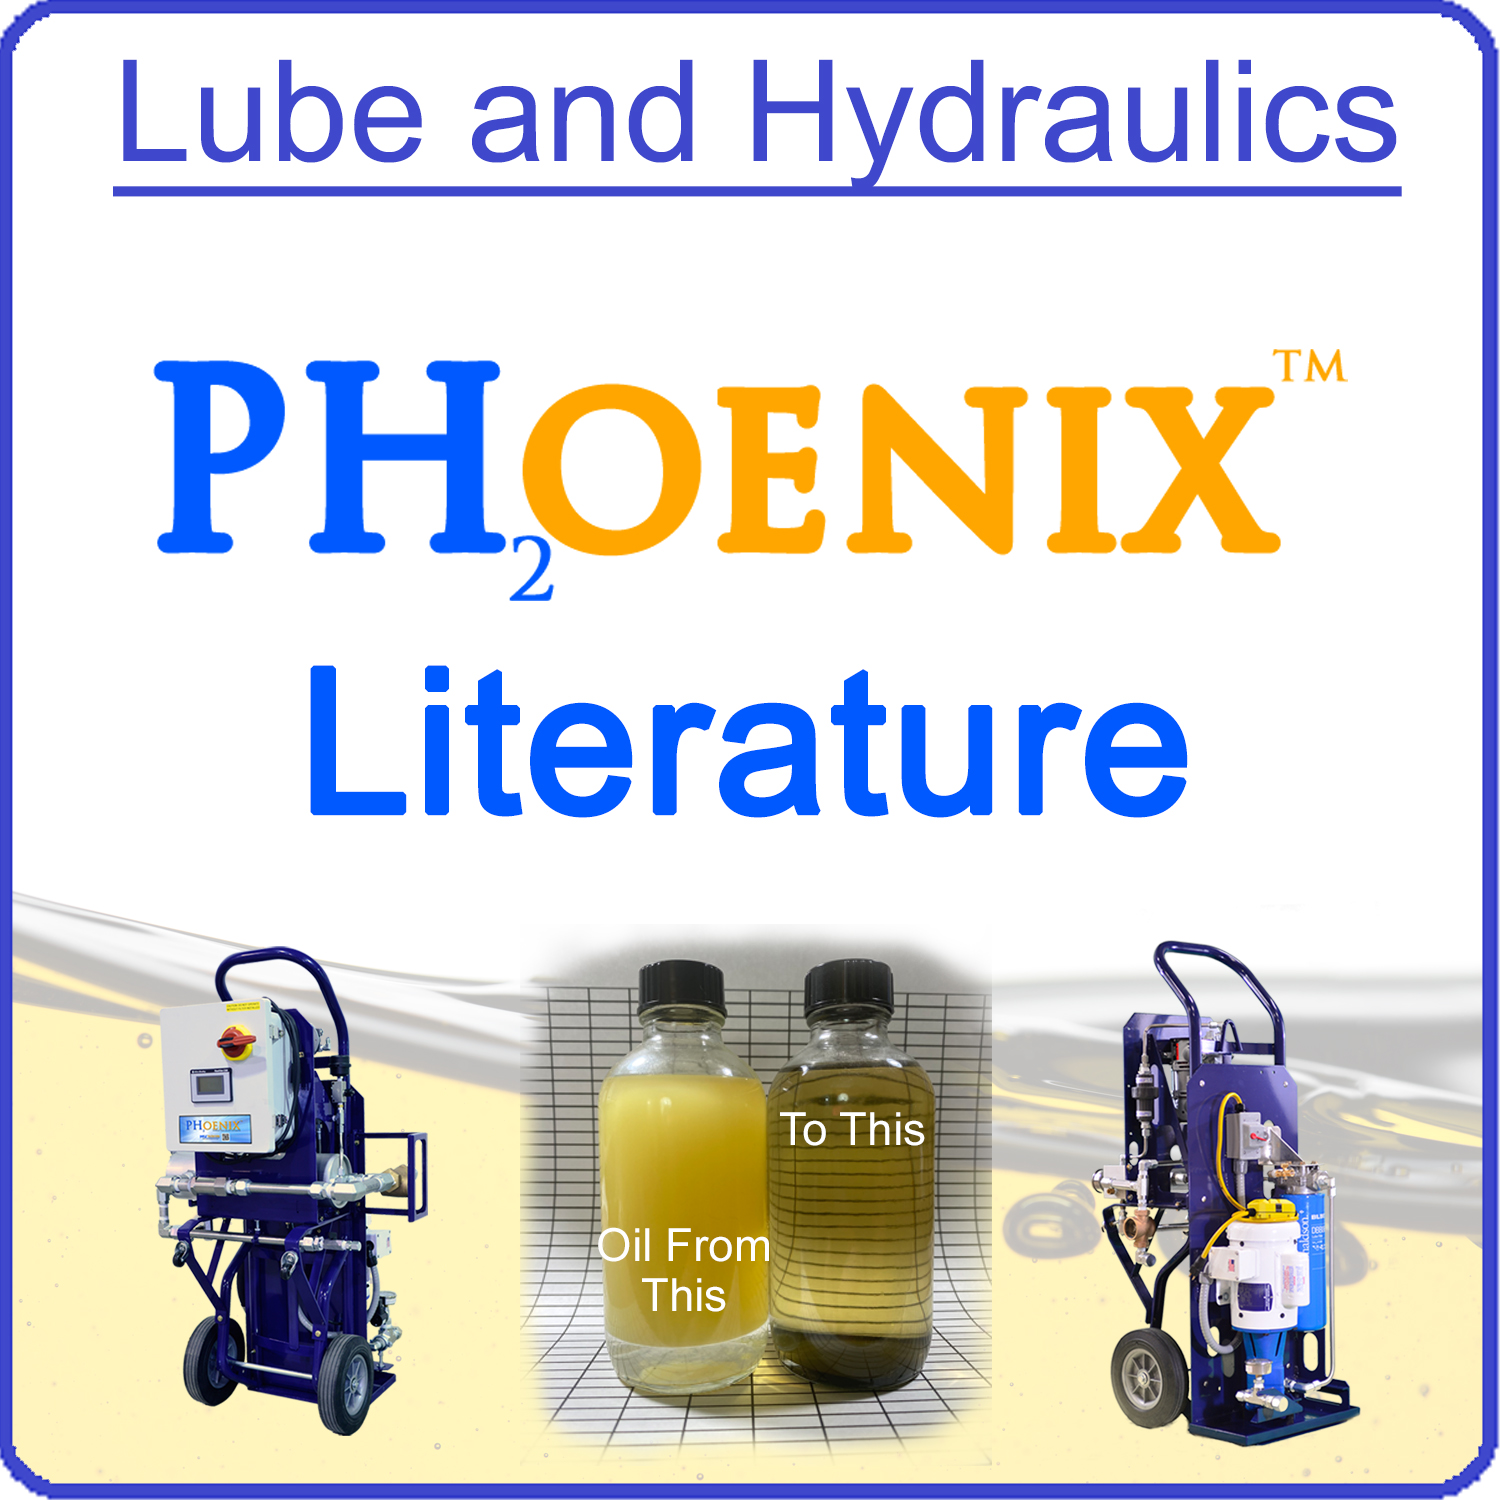 PHoenix Literature